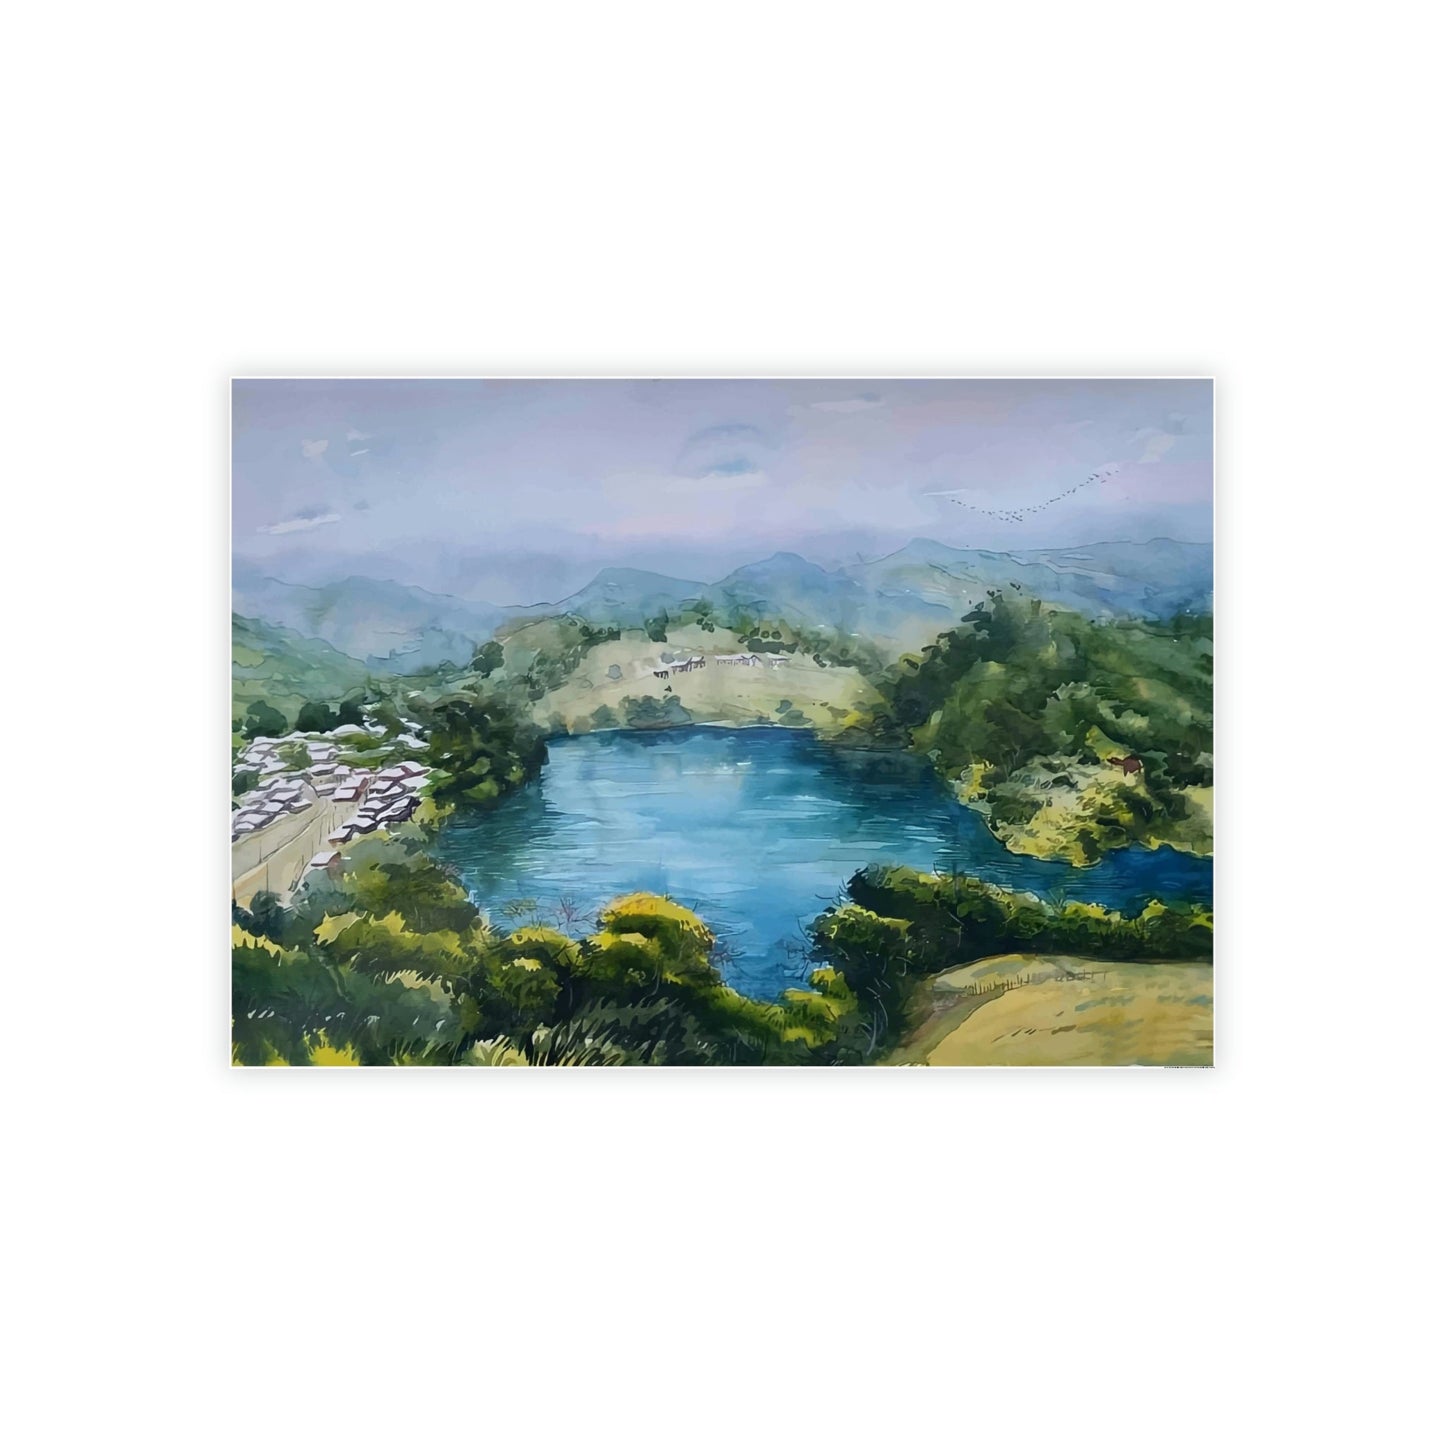 Lakeside Serenity: Natural Canvas Wall Art of a Peaceful Lake View